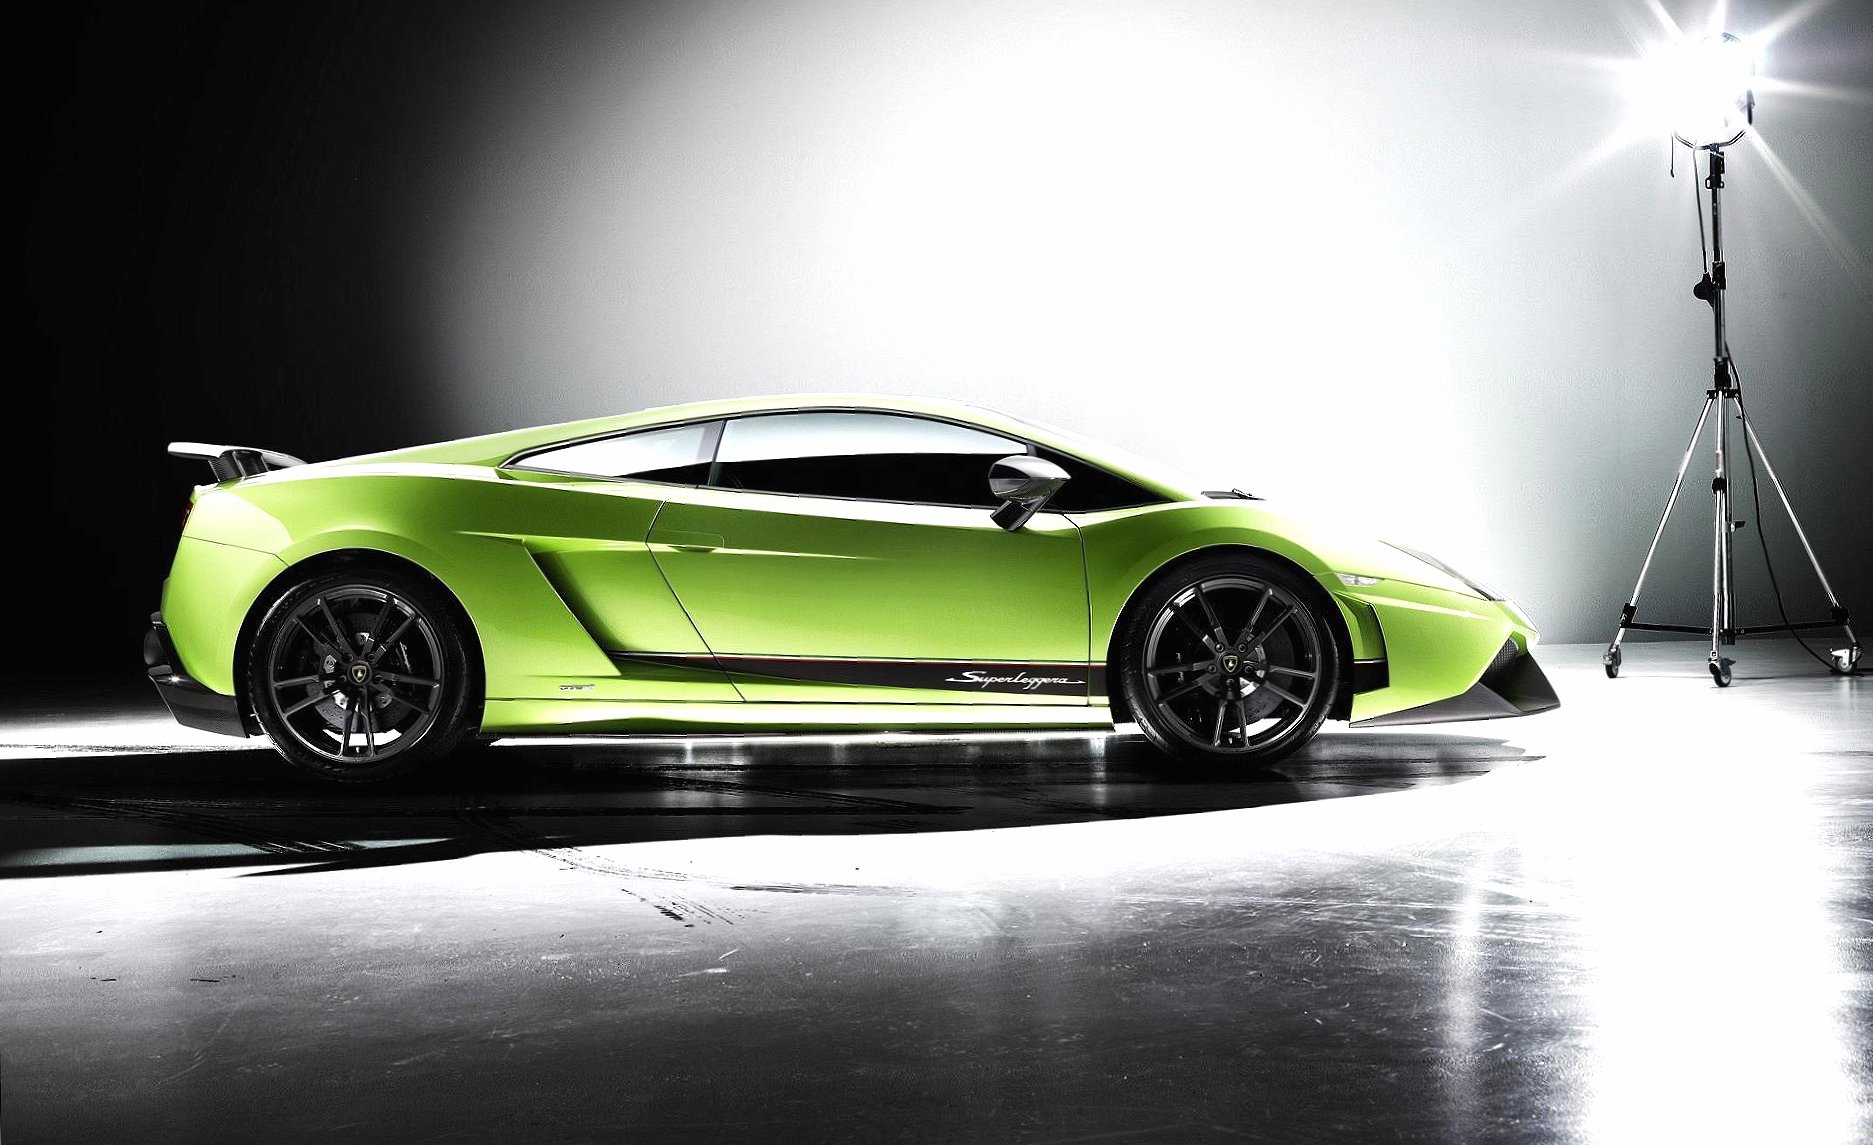 Lamborghini gallardo lp 570 4 superleggera at 1024 x 1024 iPad size wallpapers HD quality